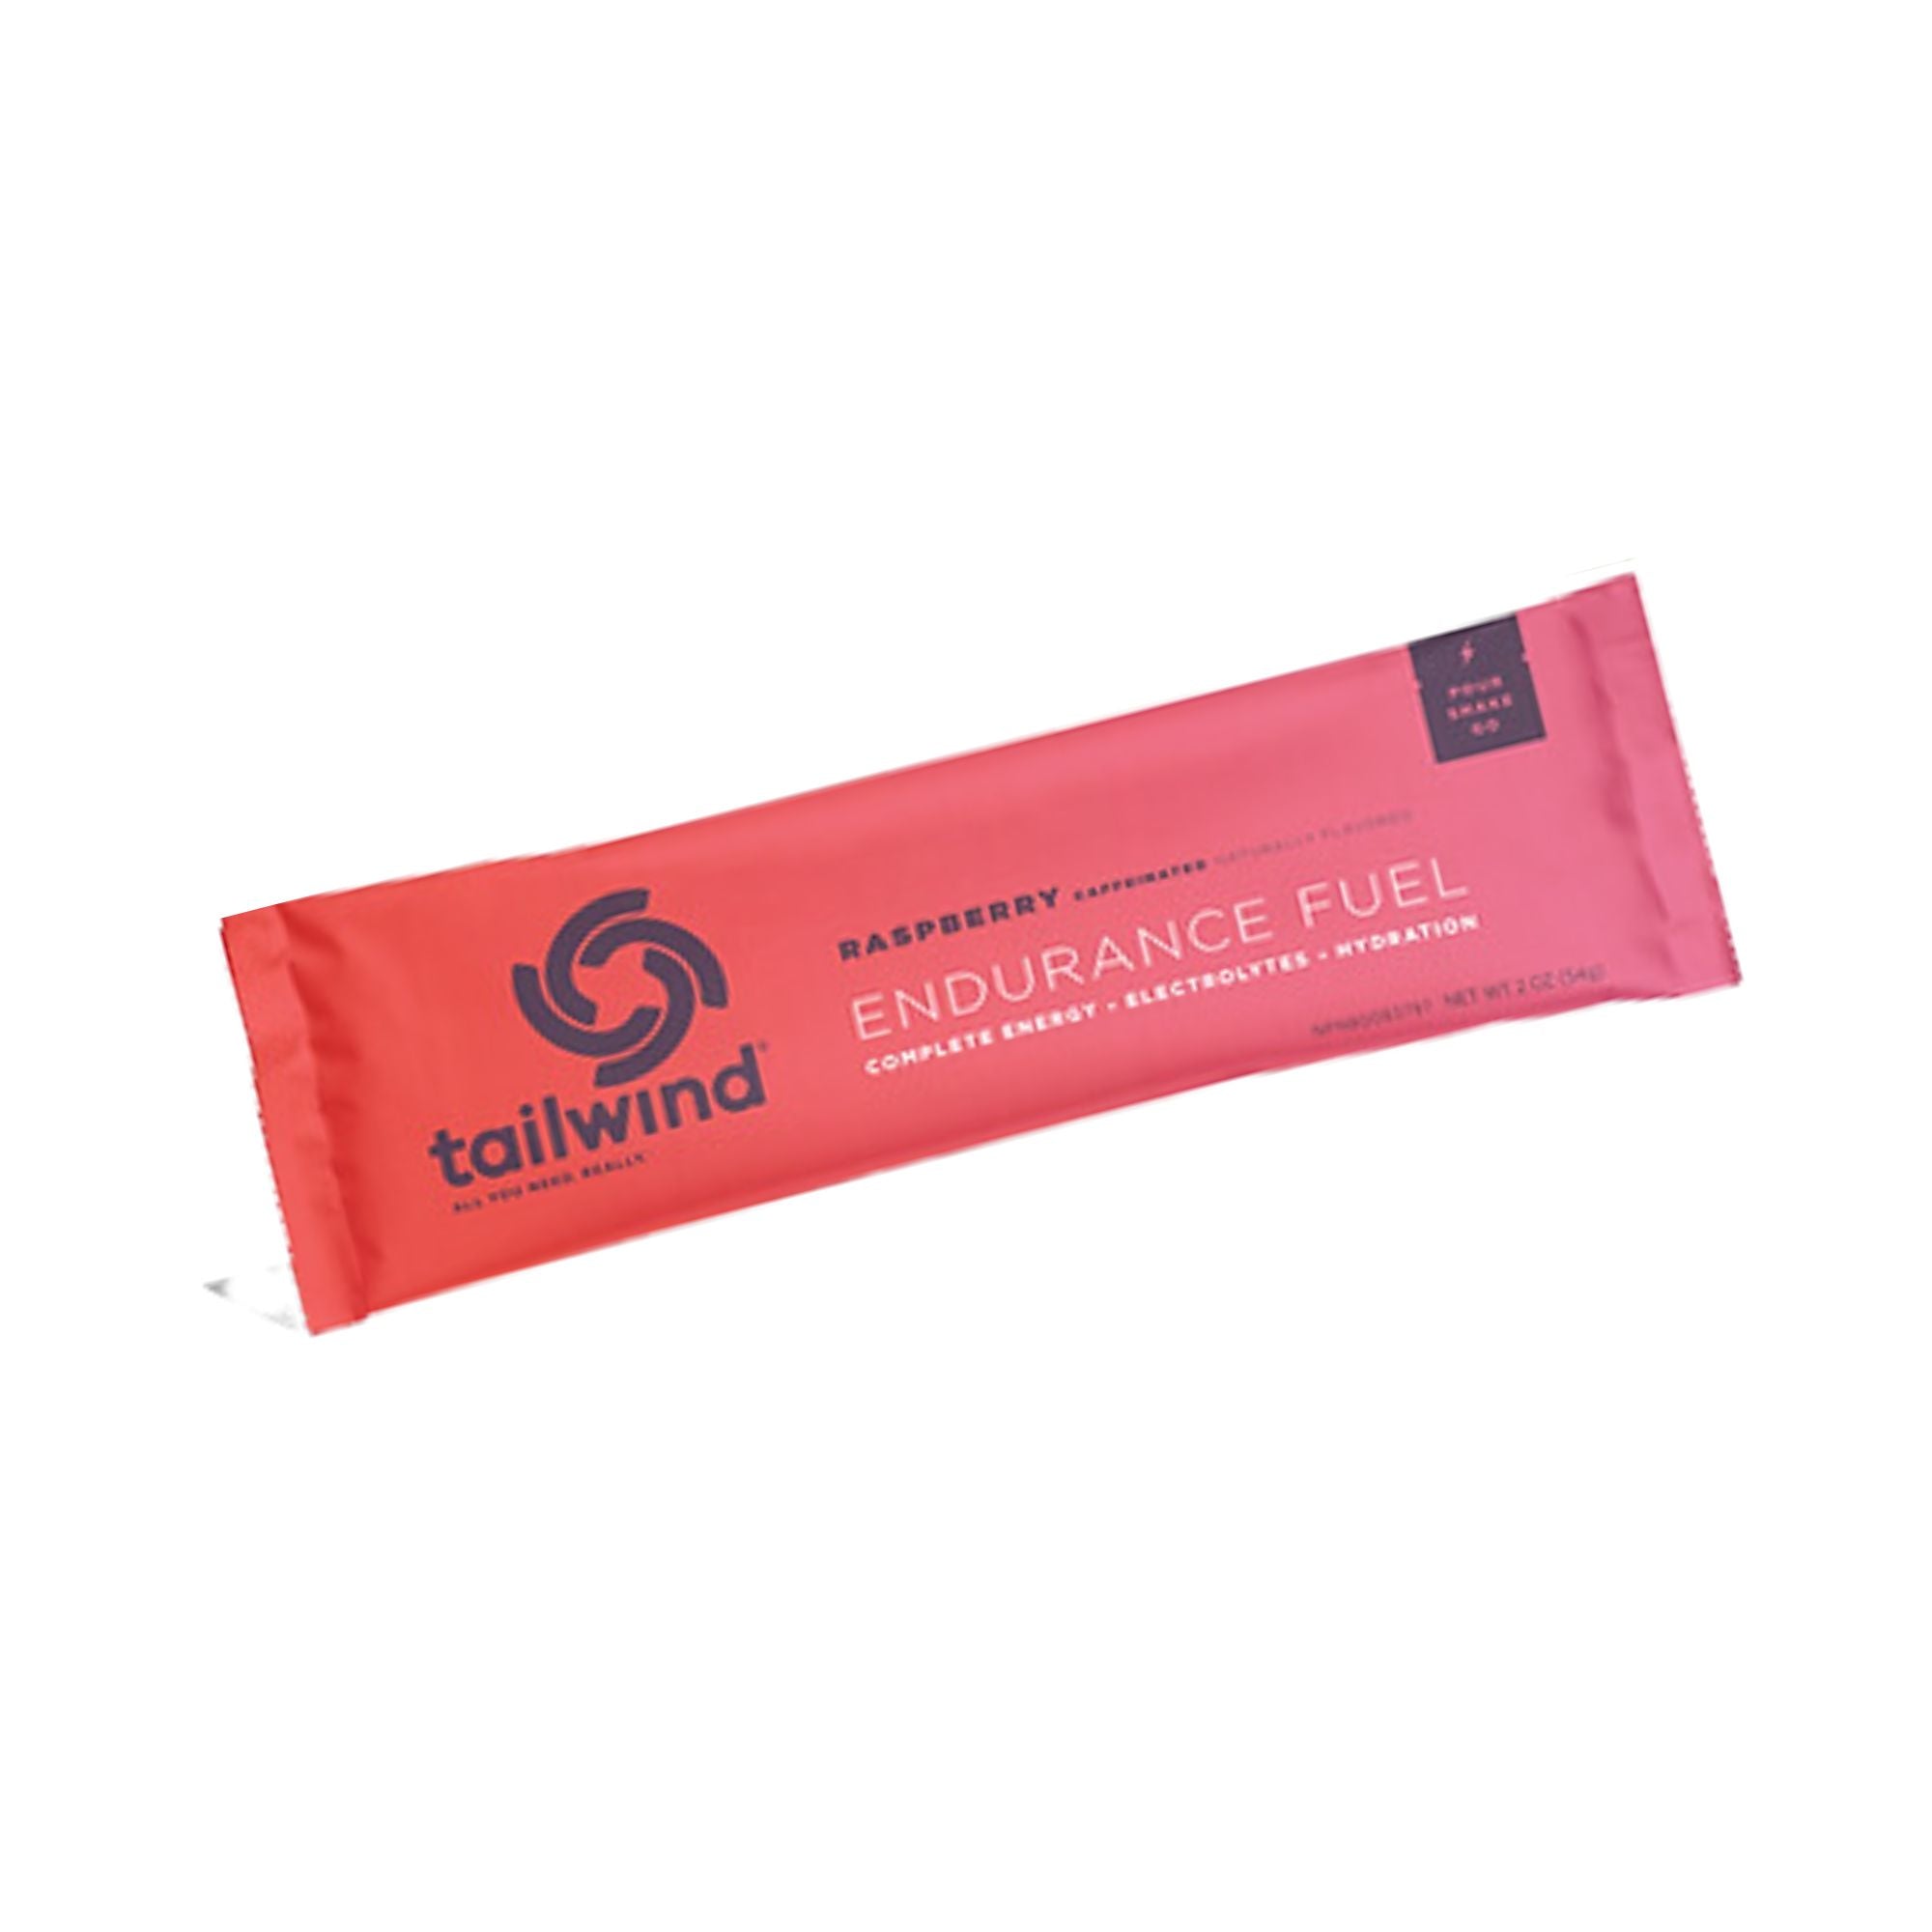 Tailwind Endurance Fuel Stick Pack - Caffeinated Endurance Supplement